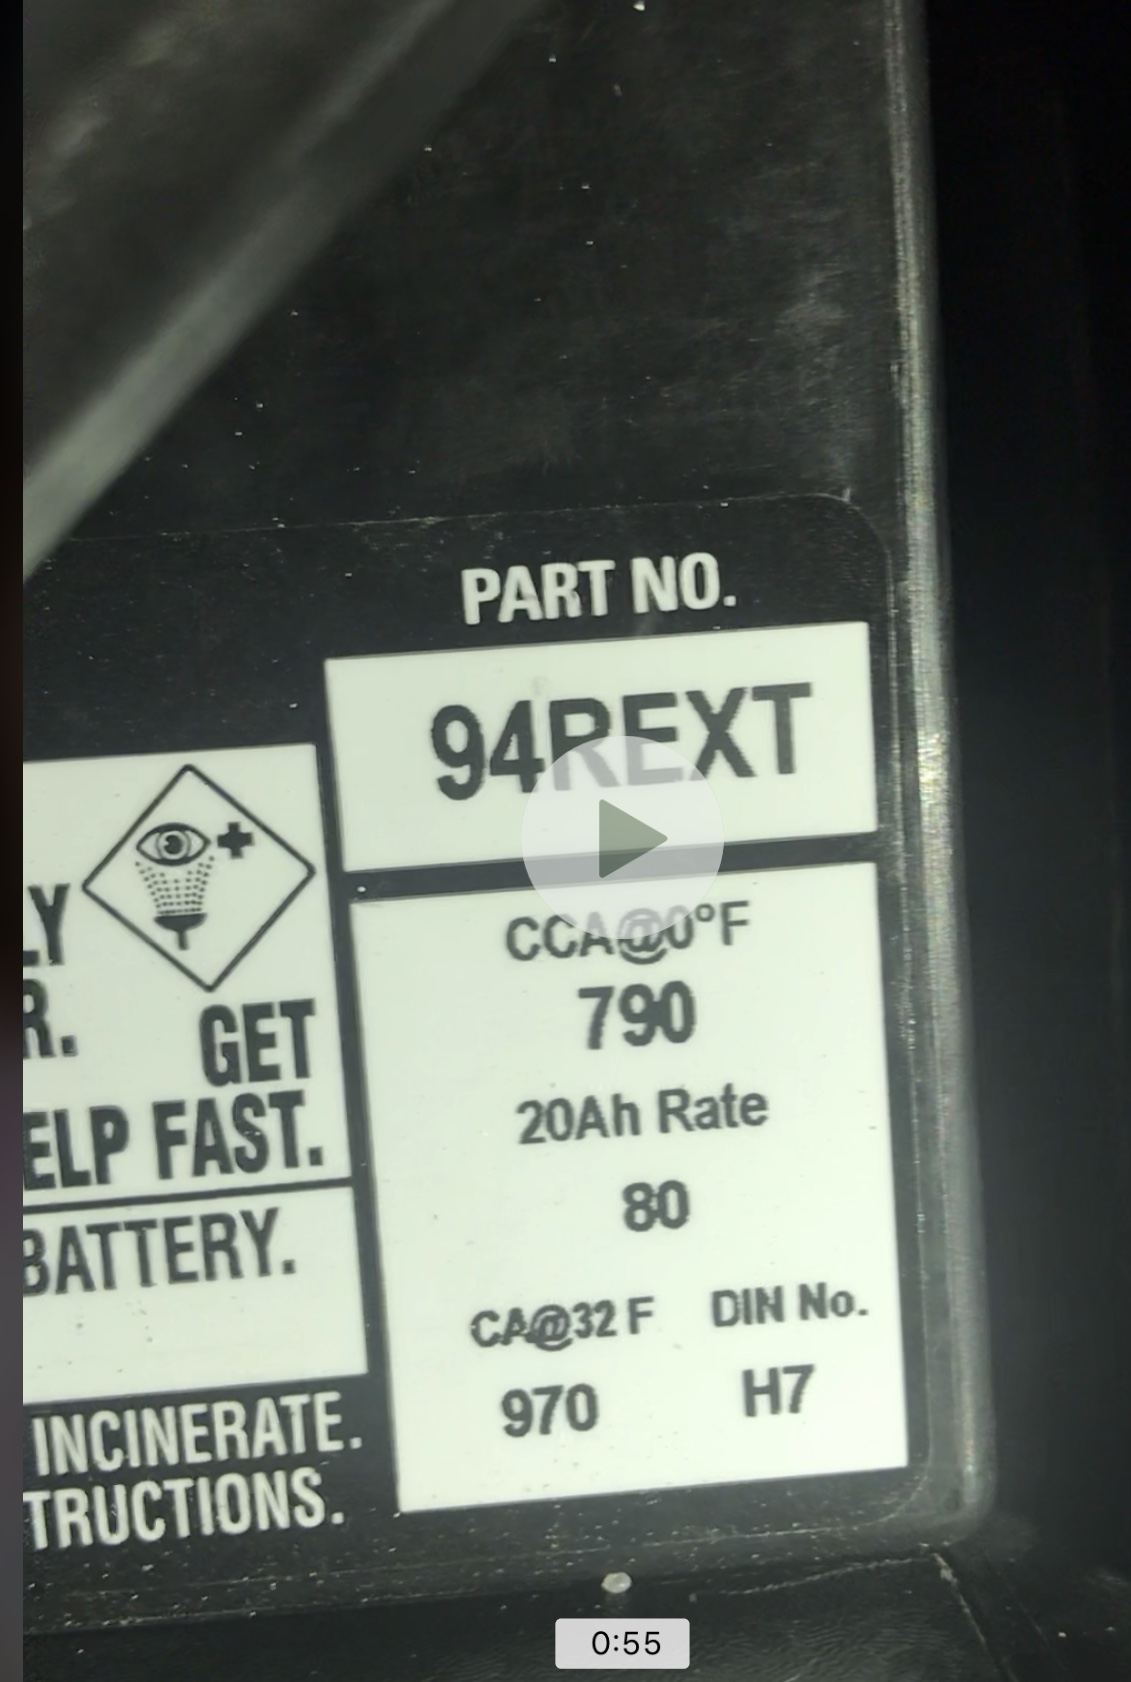 Actual battery in car